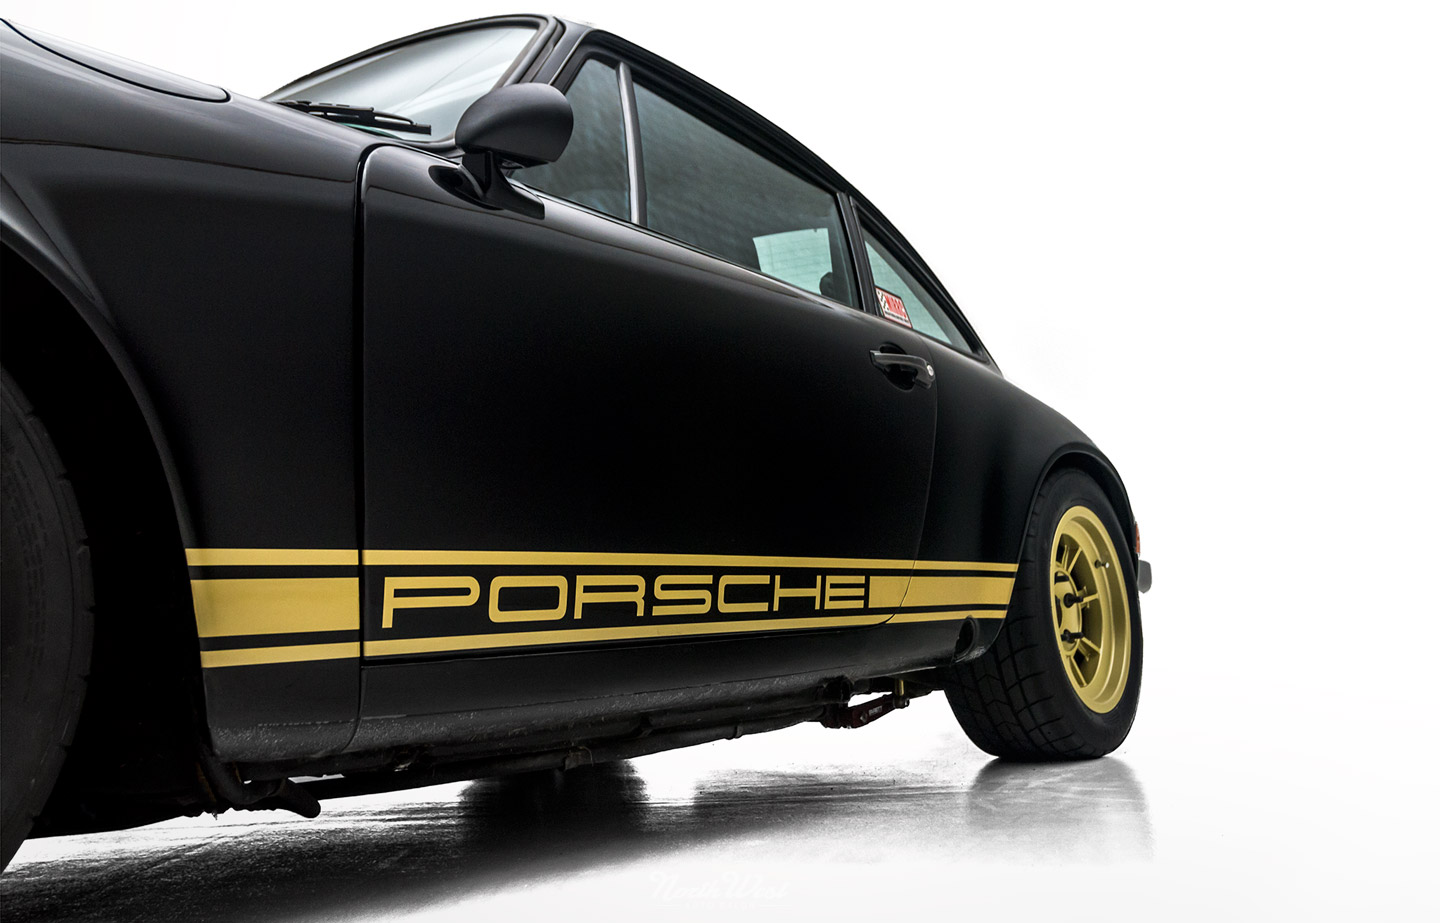 Backdated Porsche 911 gets Detailed & New Gold Vinyl Side Stripes |  NorthWest Auto Salon